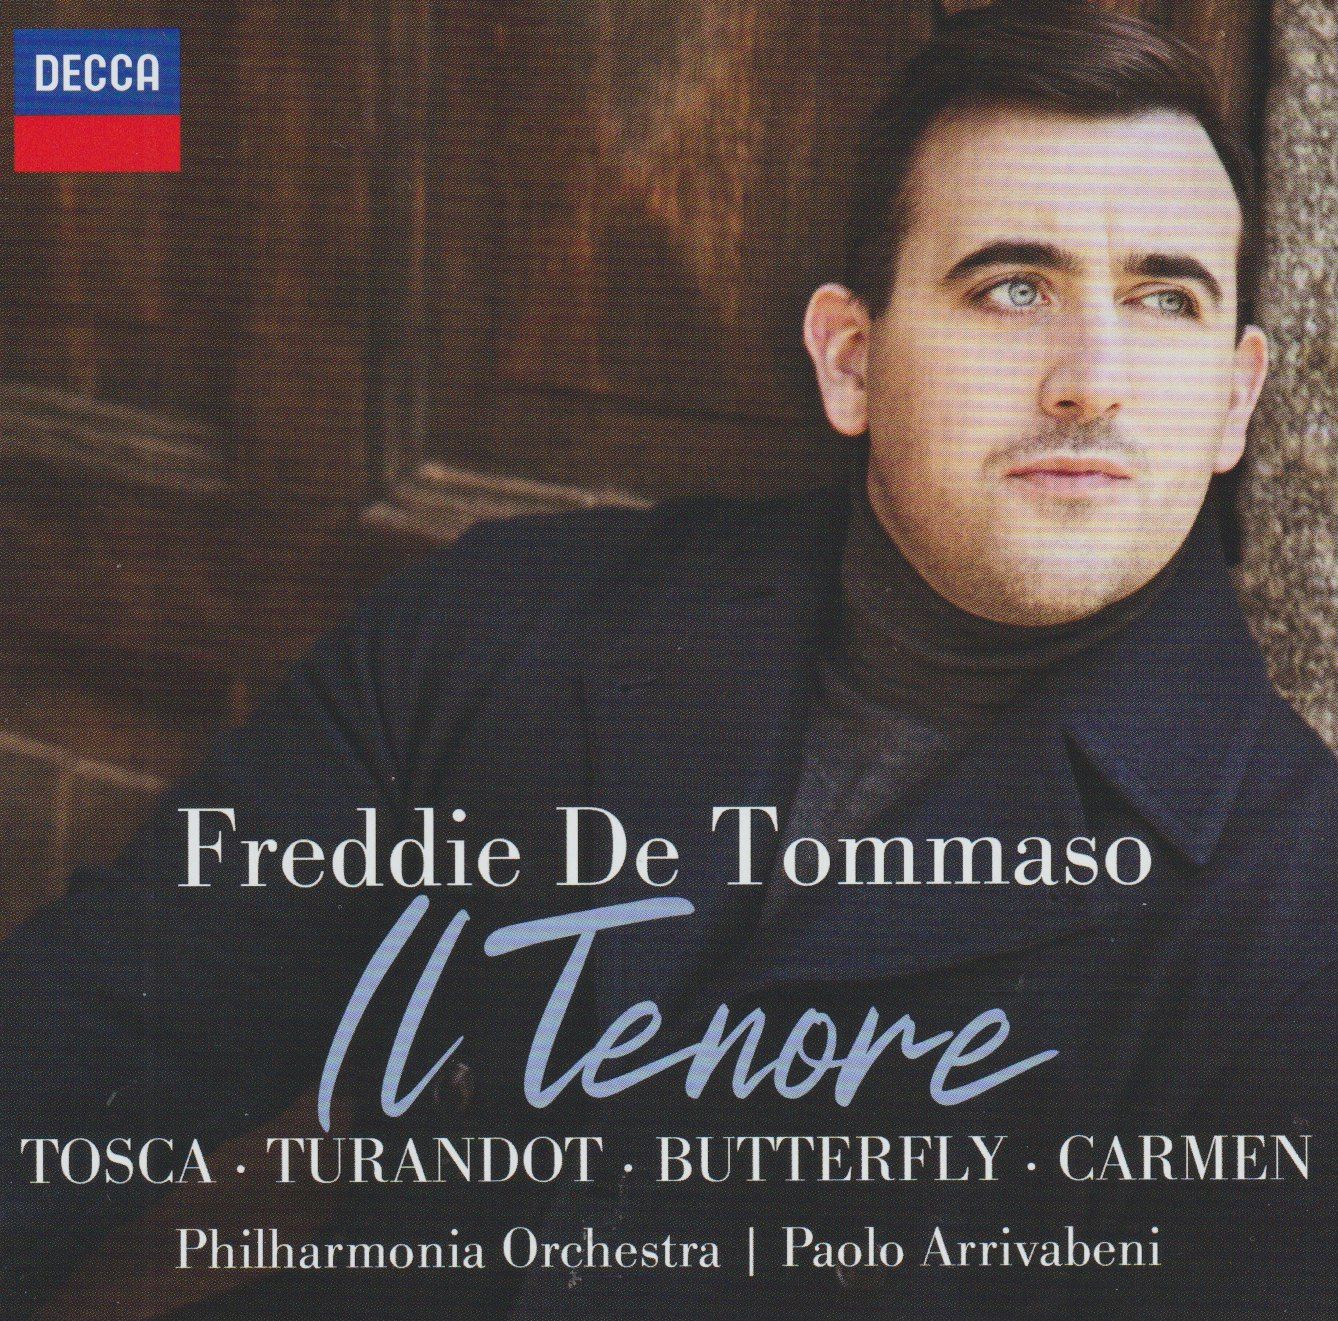 Il Tenore: Freddie De Tommaso returns